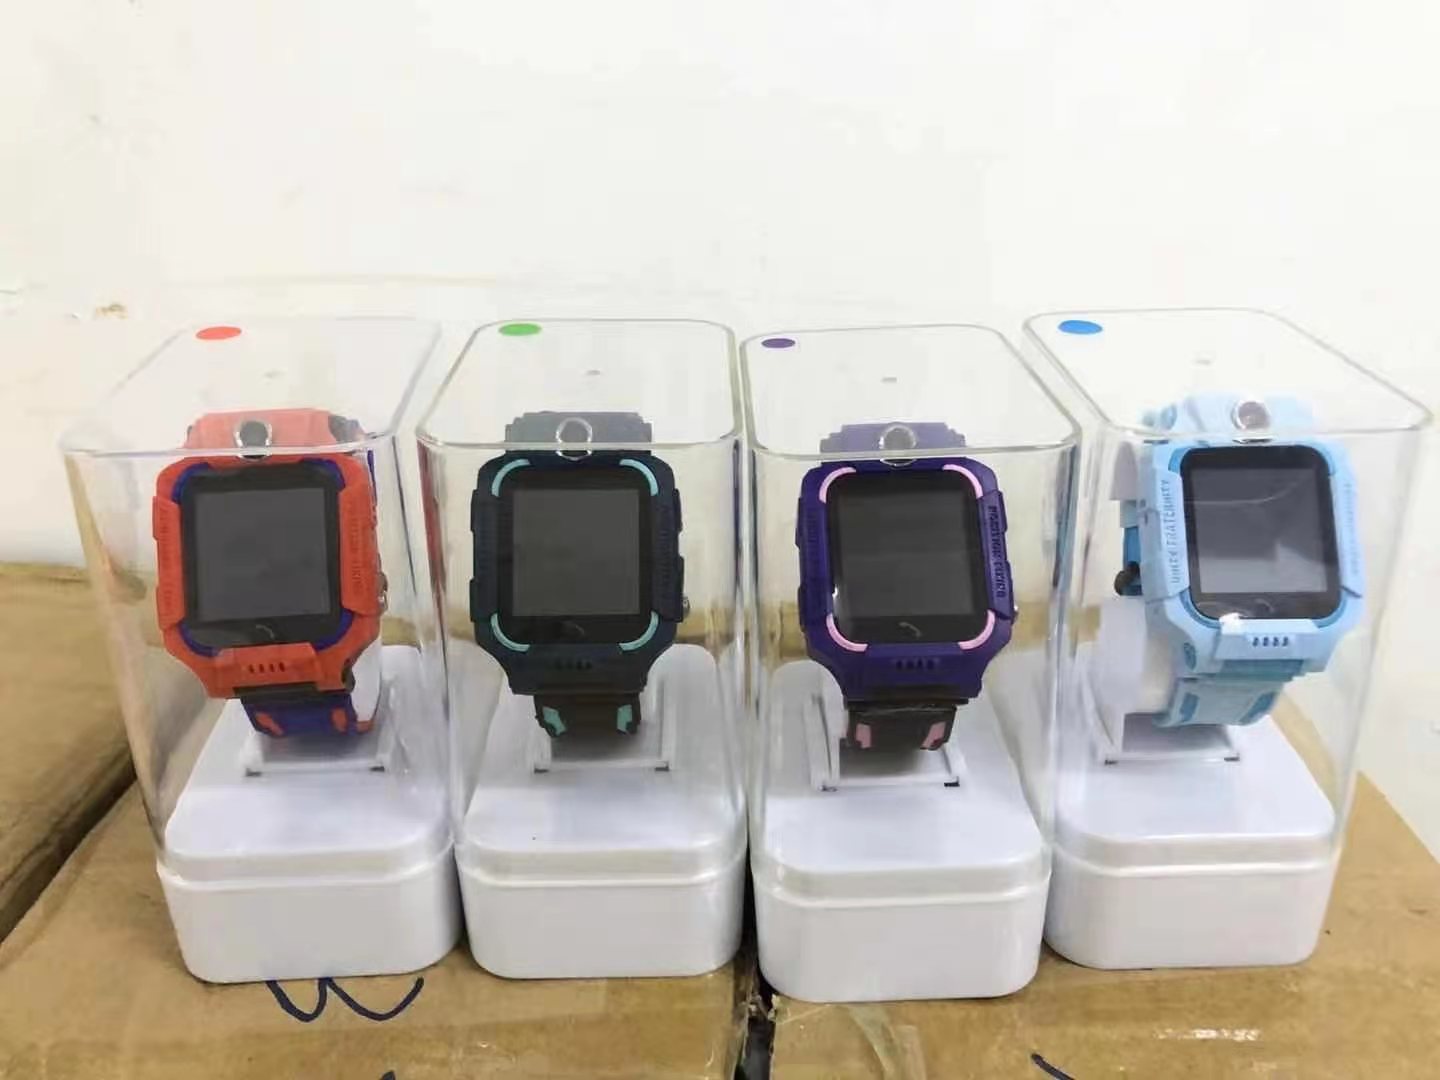 Q88 Pro (เมนูสไตล์ไทย) Kid Smart Watch นาฬิกาเด็ก กันน้ำ นาฬิกาอัจฉริยะเด็ก สองกล้องหน้าหลัง สามารถโทรได้